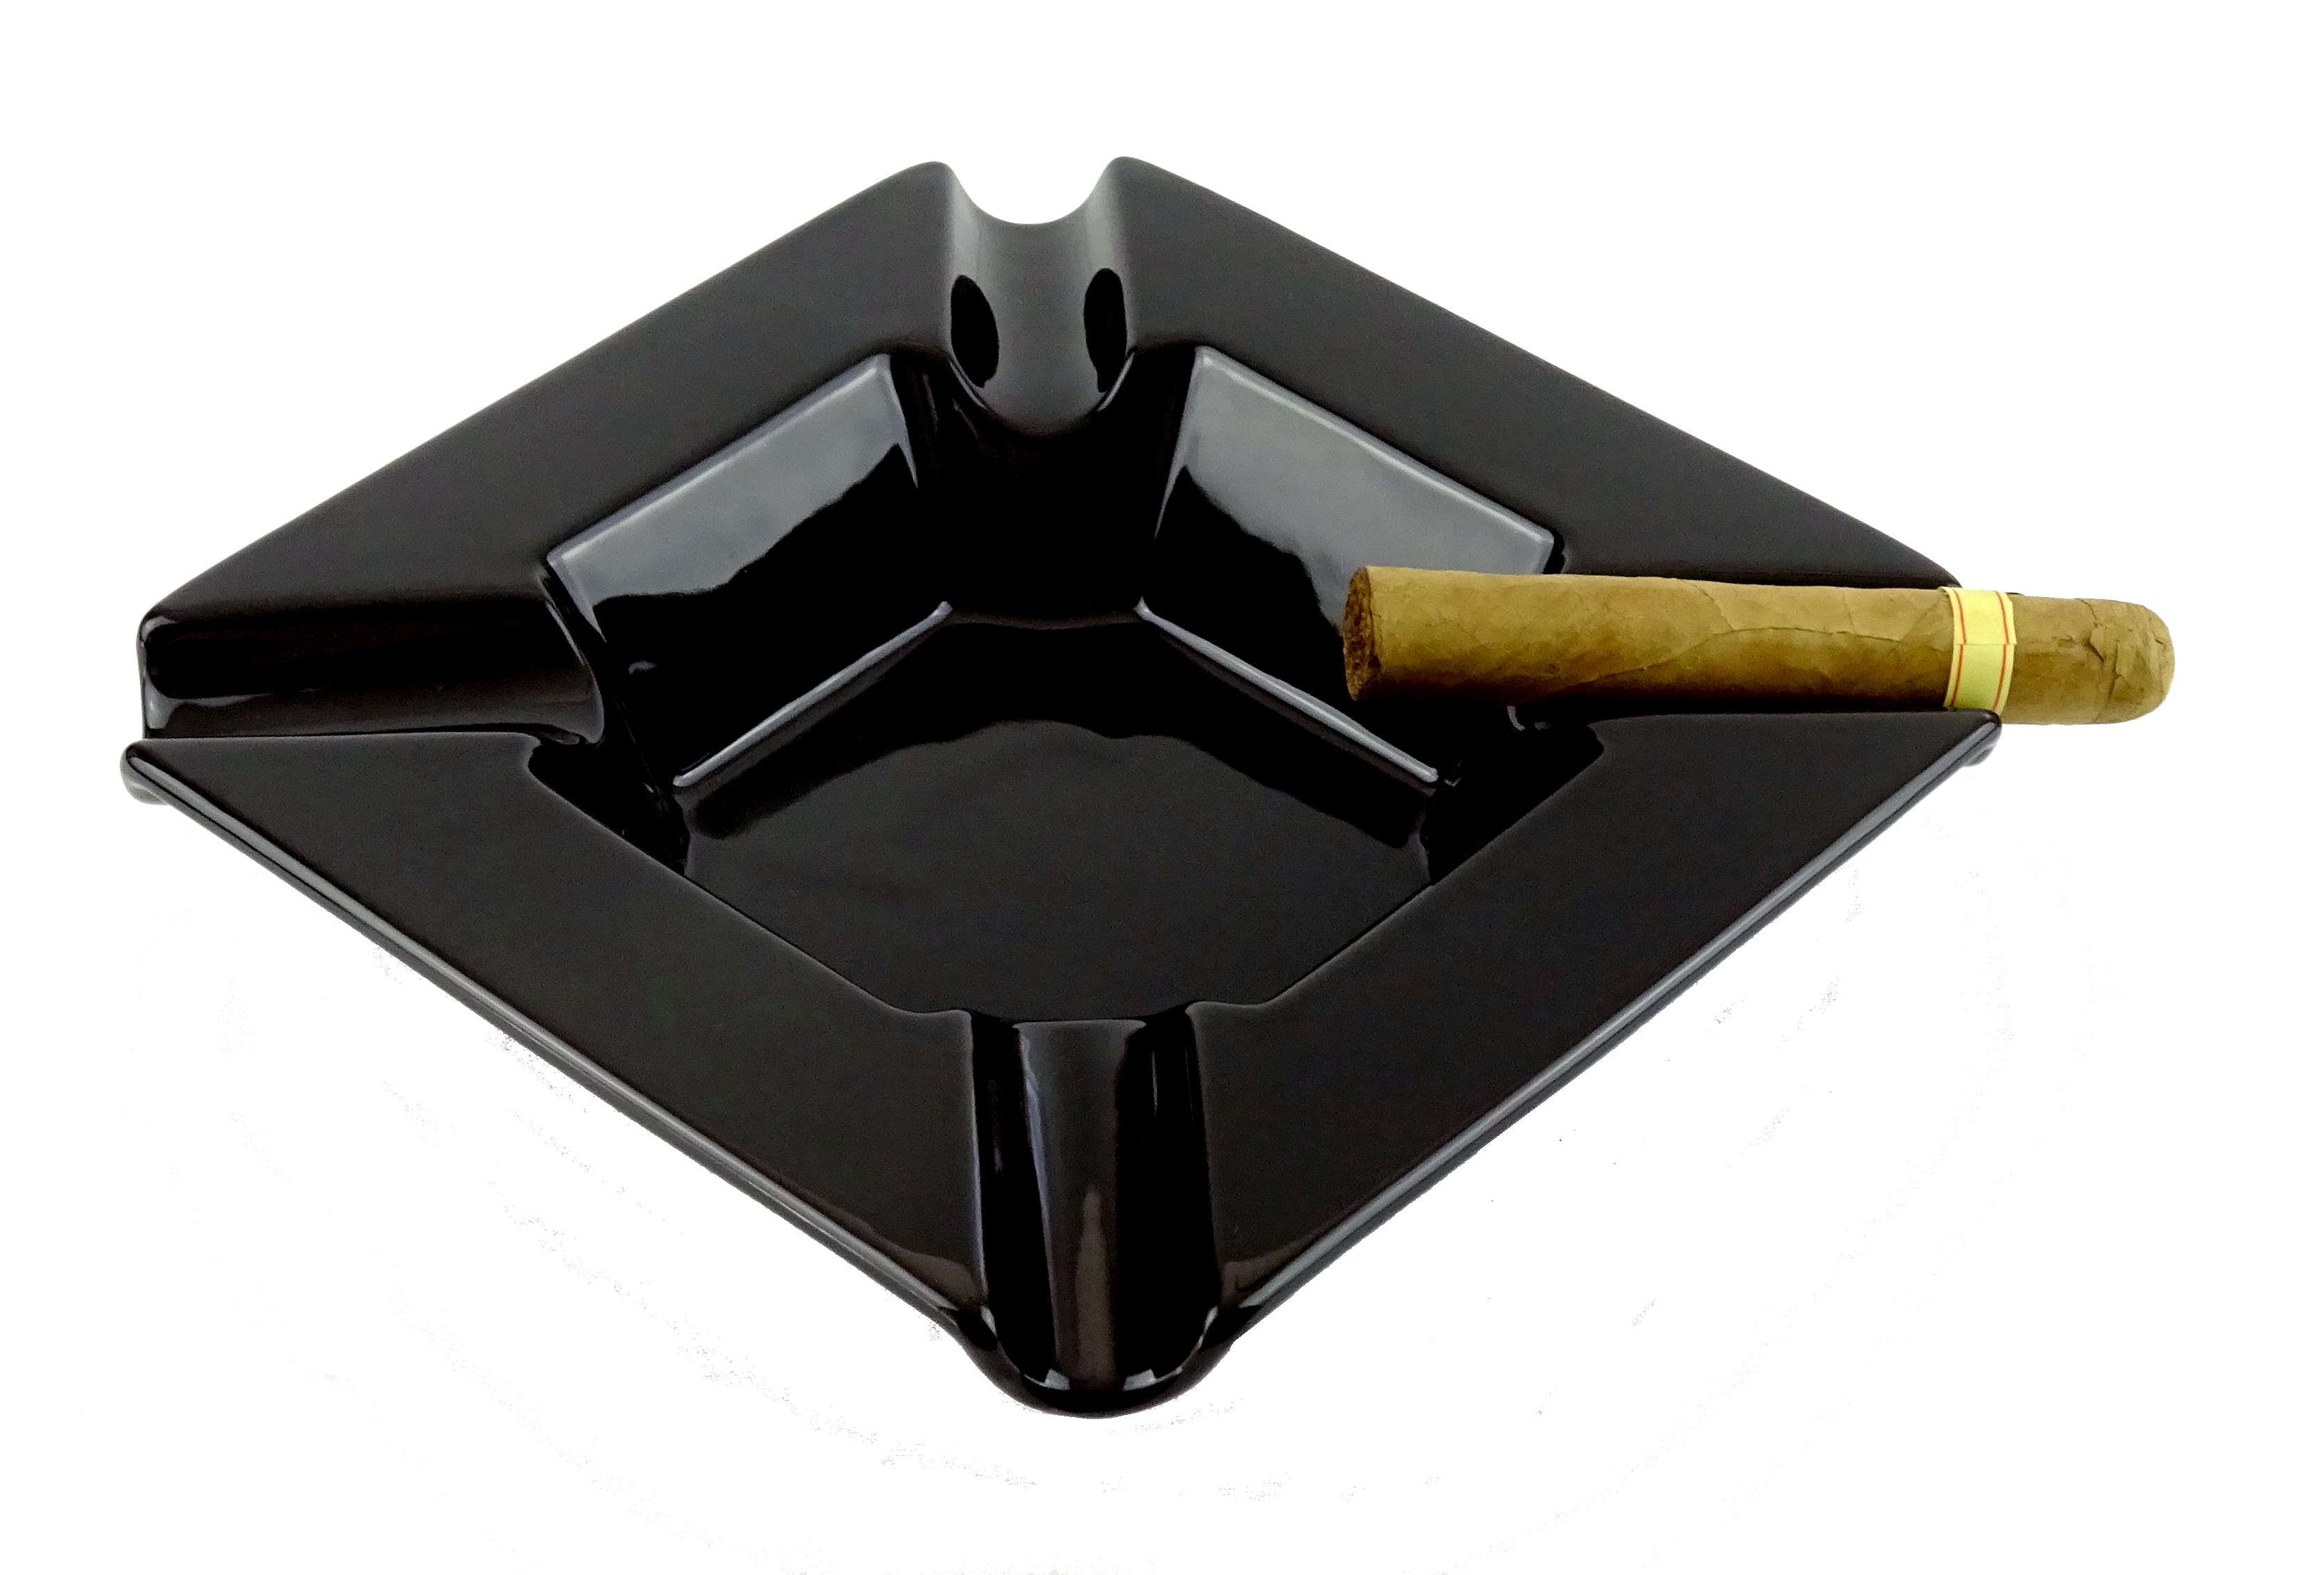 Passatore Zigarren Aschenbecher Zigarrenascher schwarz